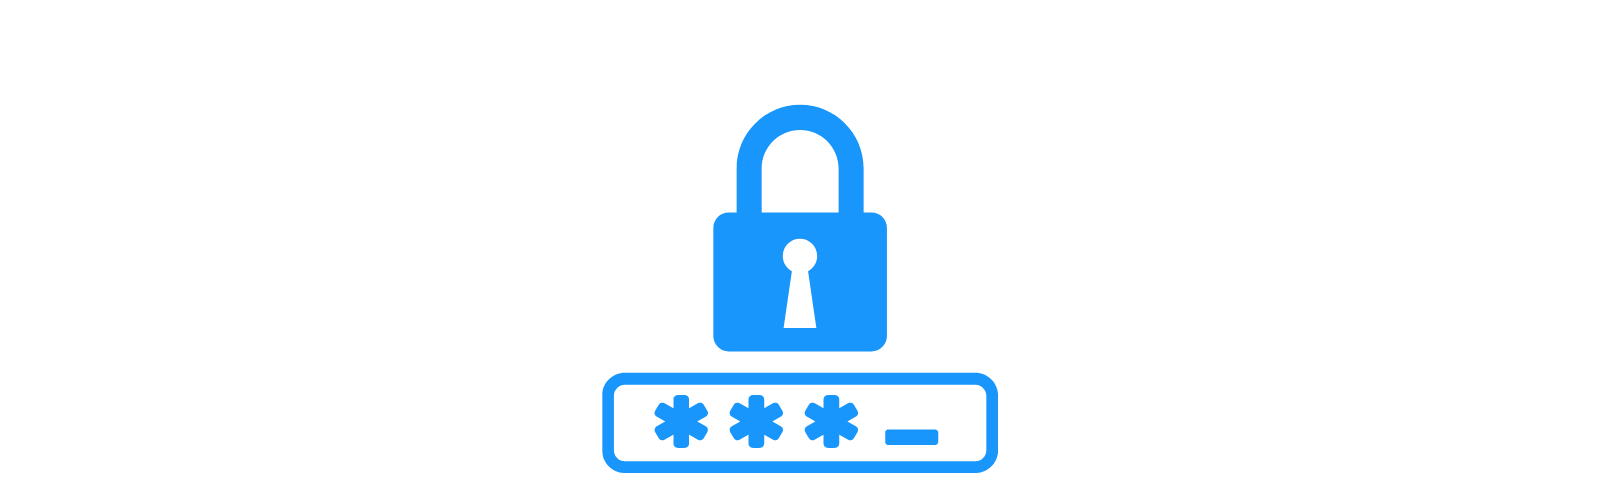 Password Protected Symbol (Web Asset)-1